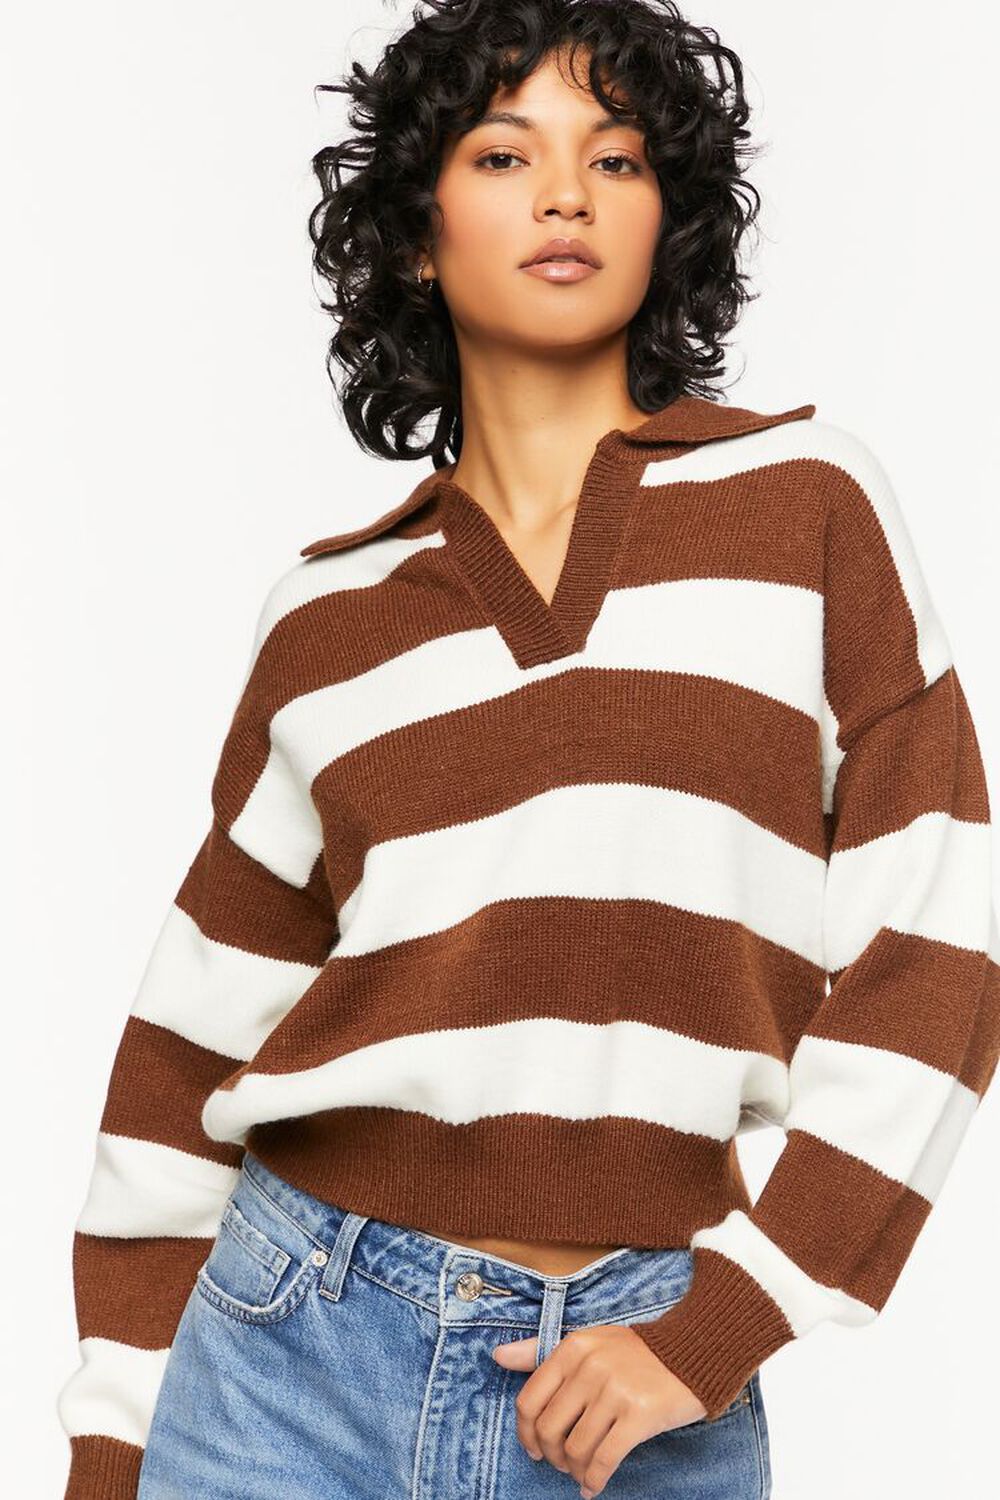 BROWN/CREAM Striped Collared Sweater, image 1